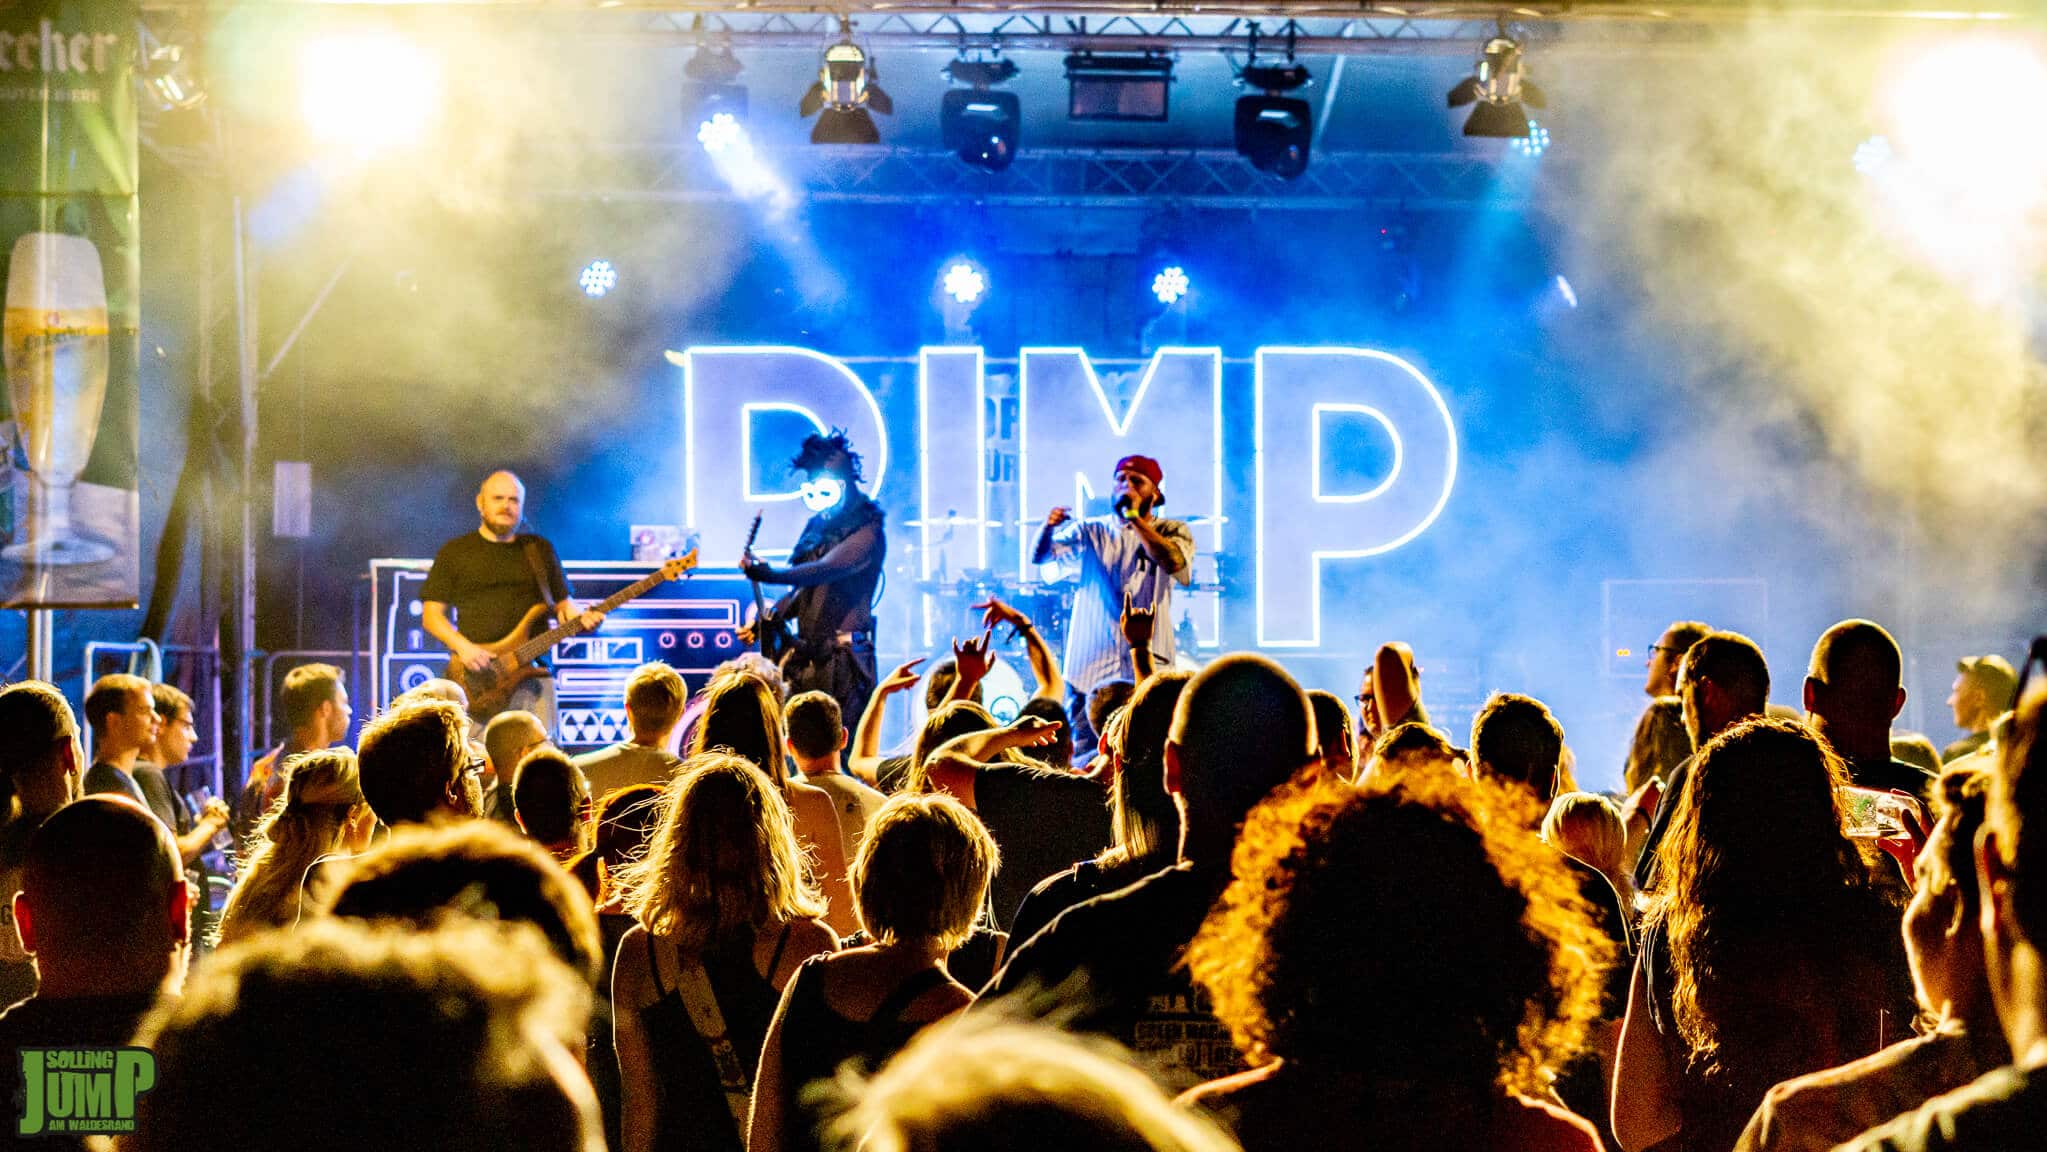 dma-music_booking-agentur_musik_tribute-bands_cover-bands_aschaffenburg-frankfurt_pimp_blitzkid_live3